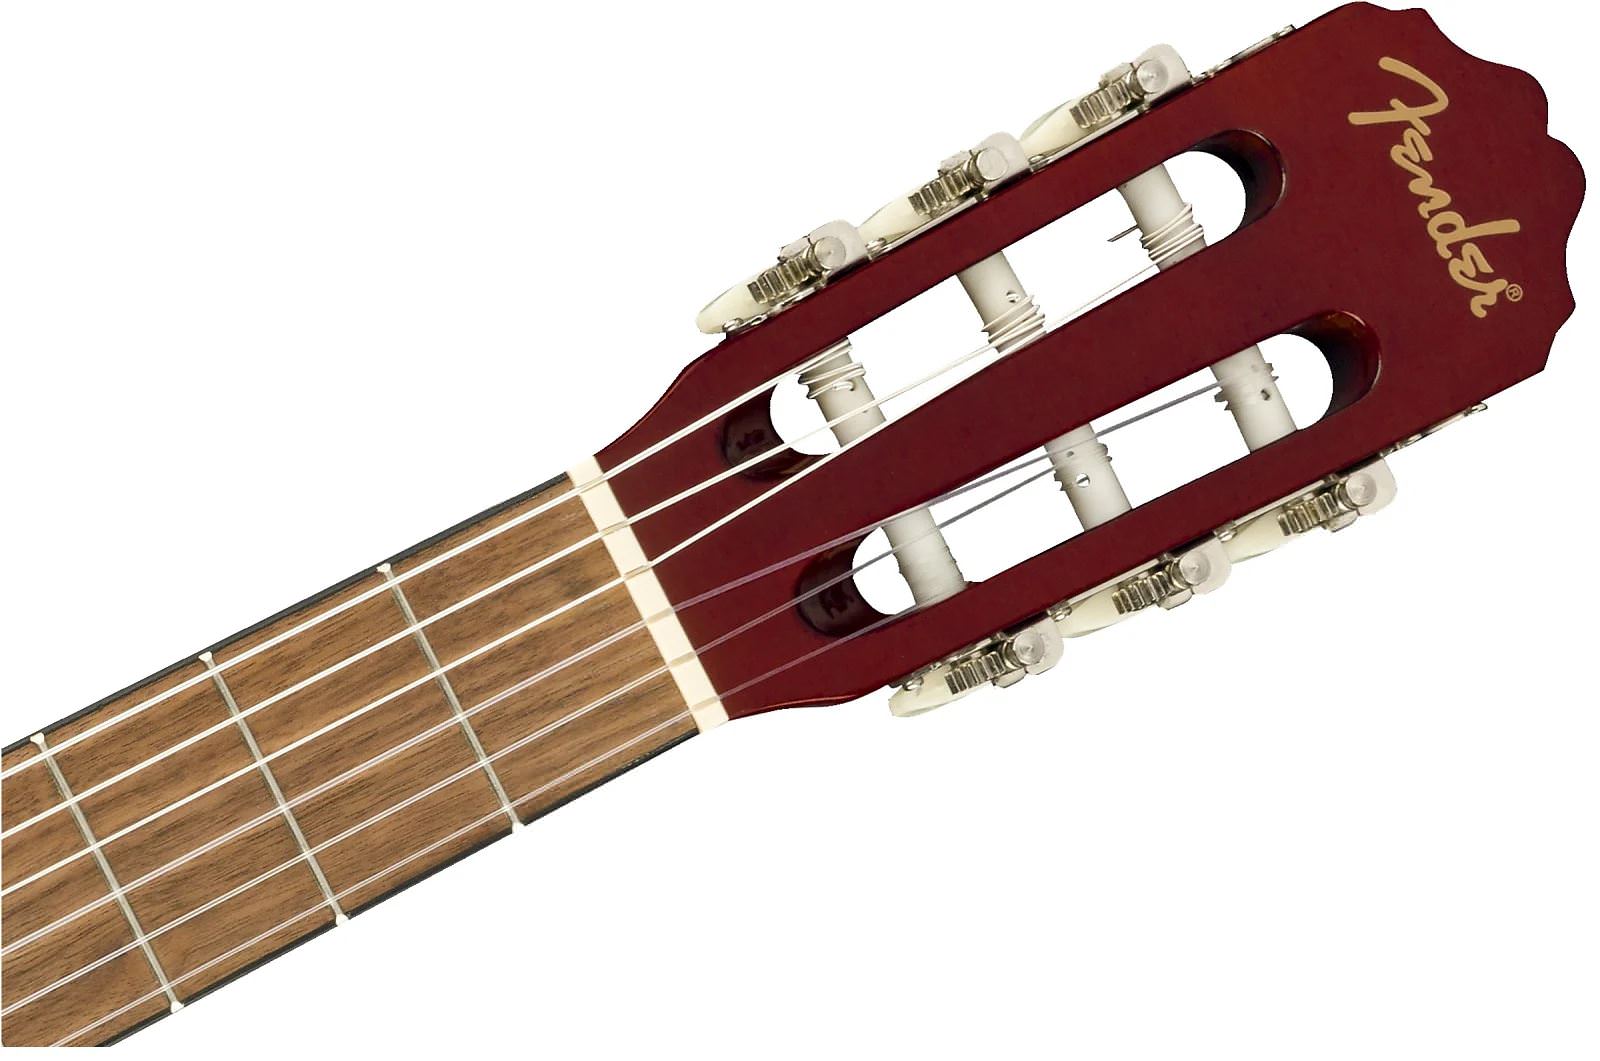 Классическая гитара FENDER FC-1 Classical Natural WN